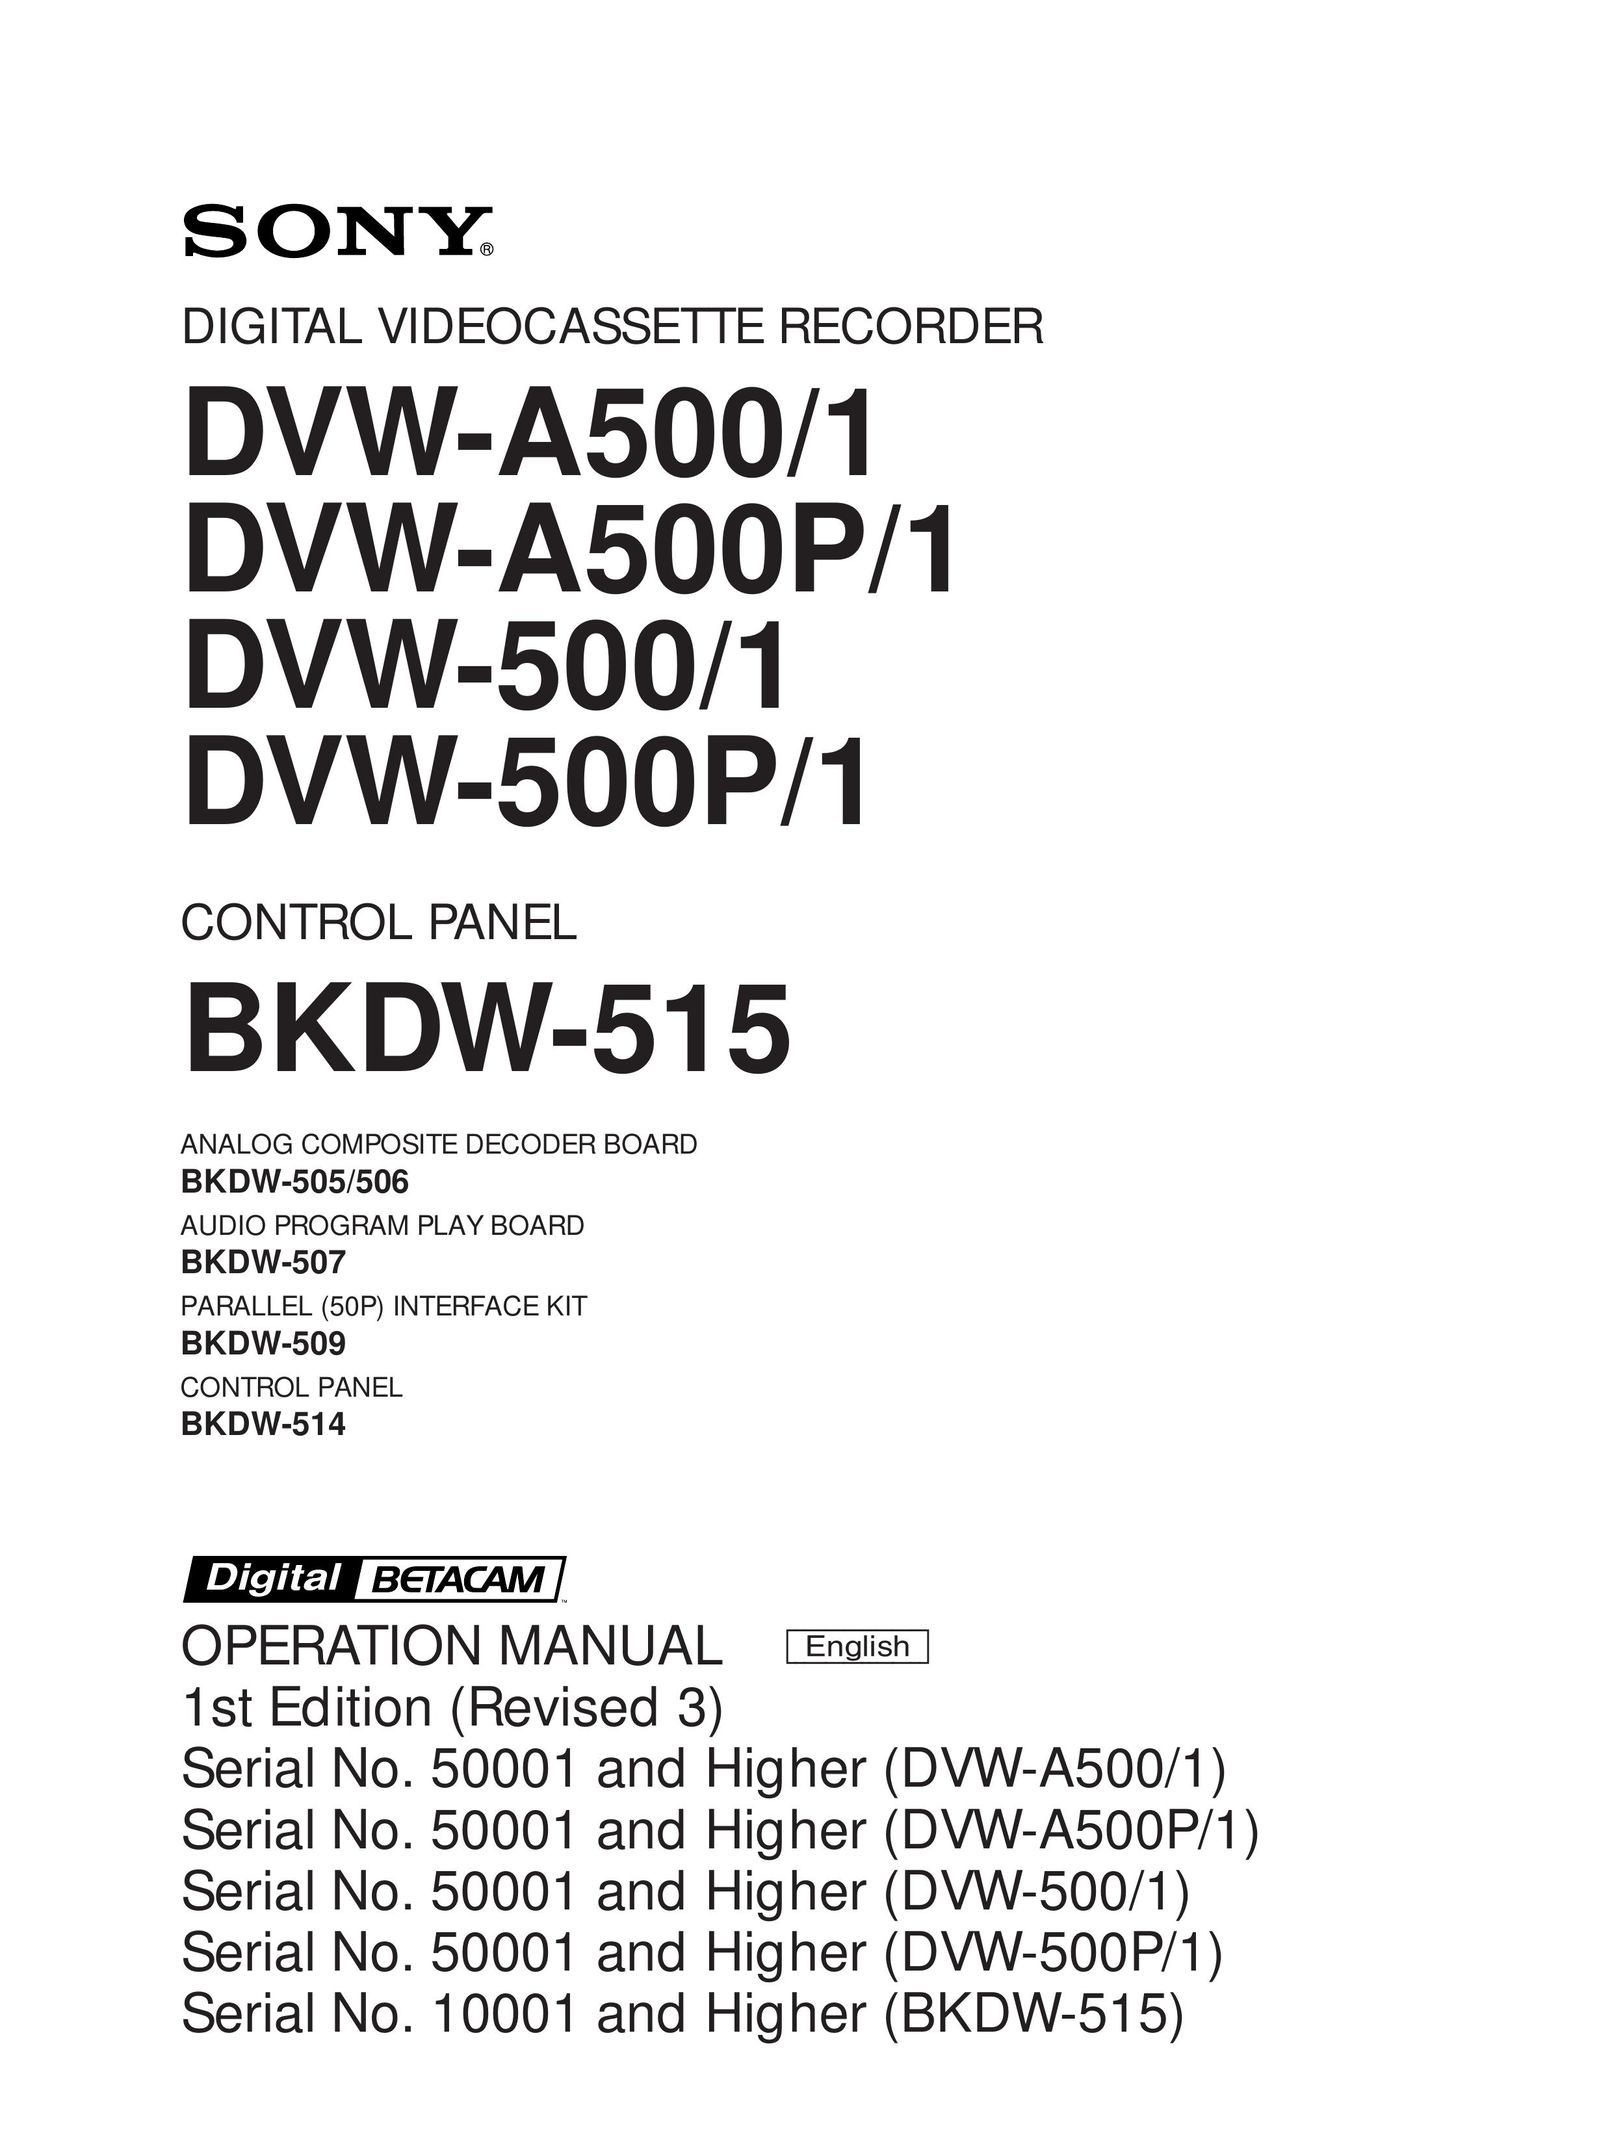 Sony BKDW-515 DVR User Manual